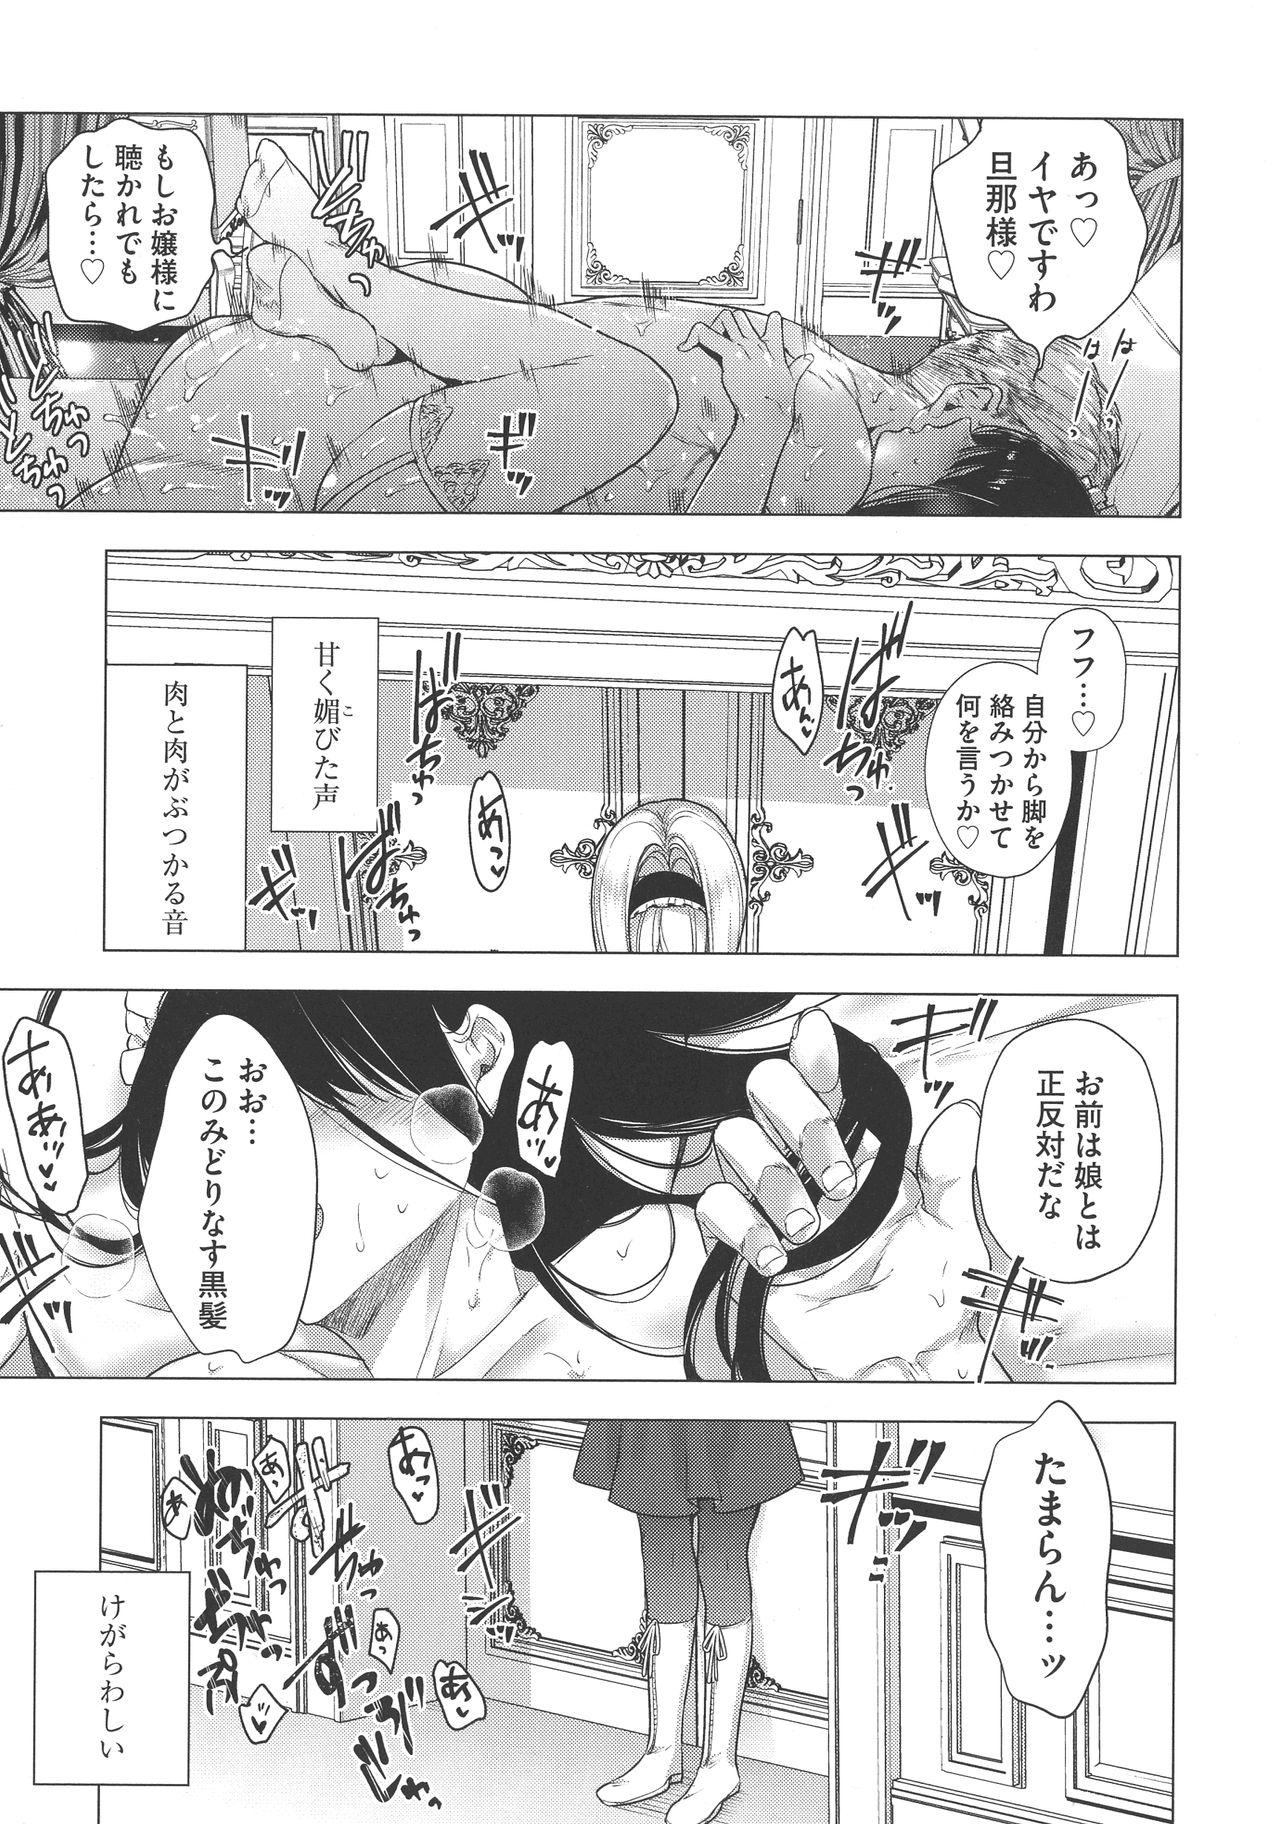 Gozada Yugande wa iruga are wa koidatta. Solo - Page 9